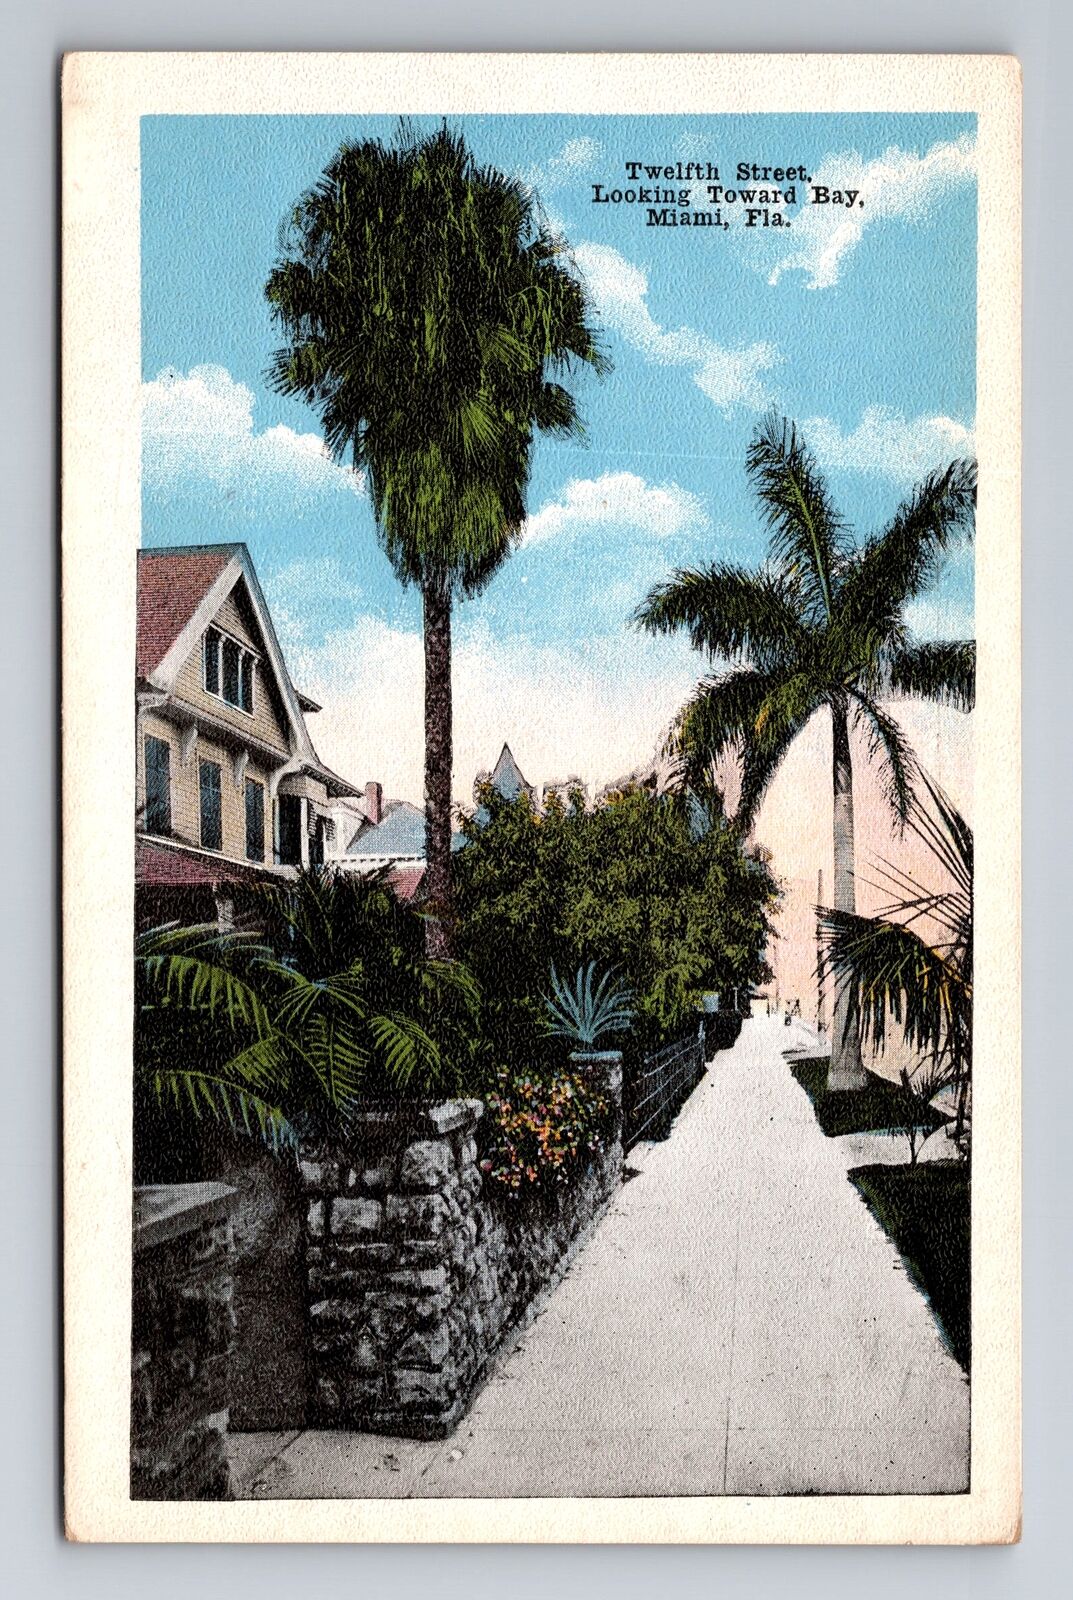 Miami FL-Florida, Twelfth Street, Antique, Vintage Souvenir Postcard